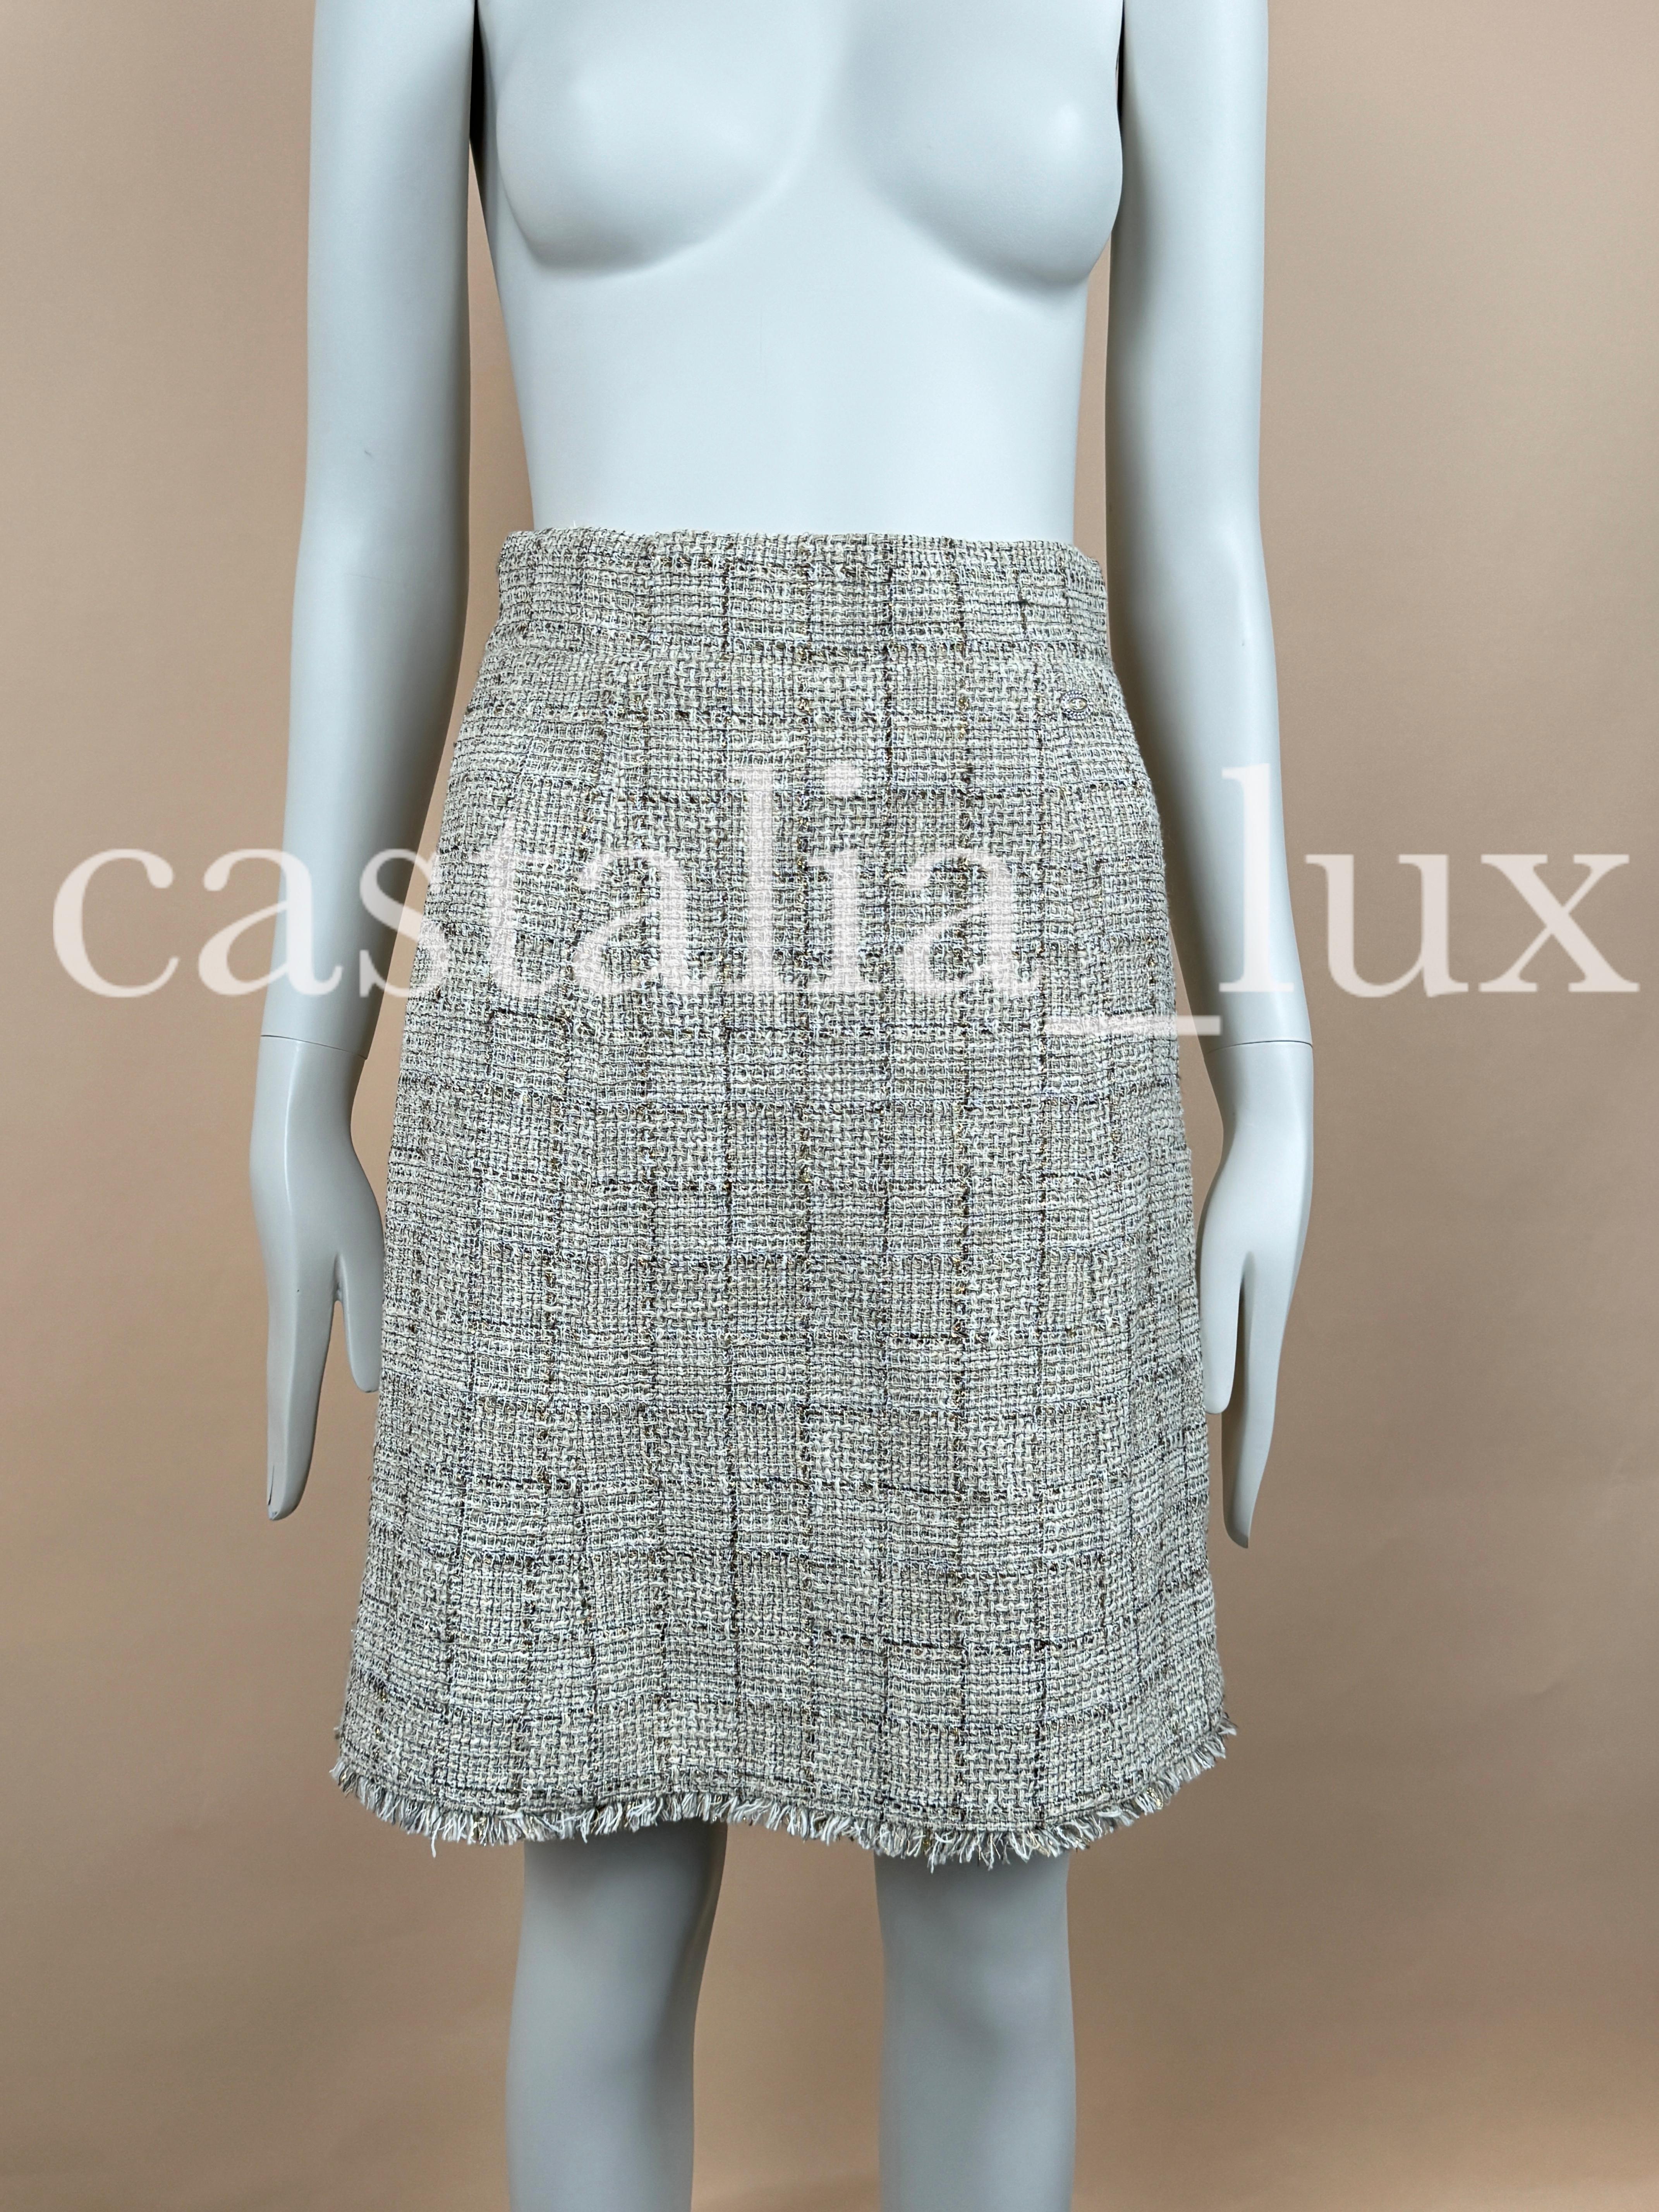 Chanel Gisele Bundchen Style Jewel Buttons Tweed Suit For Sale 8